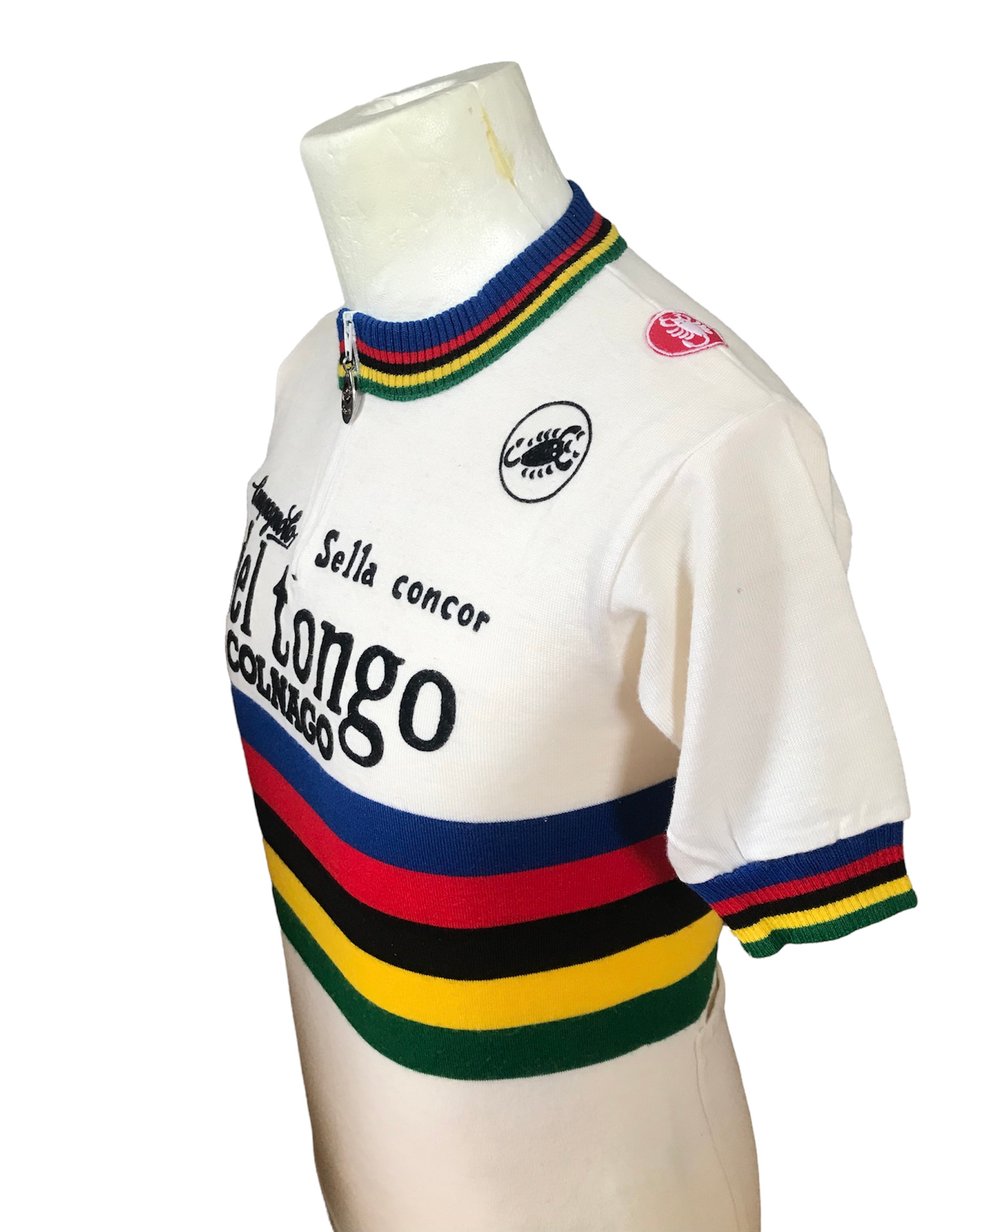 1982 🇮🇹 Replica jersey for Giuseppe Saronni - Road World Champion winner in 1982 